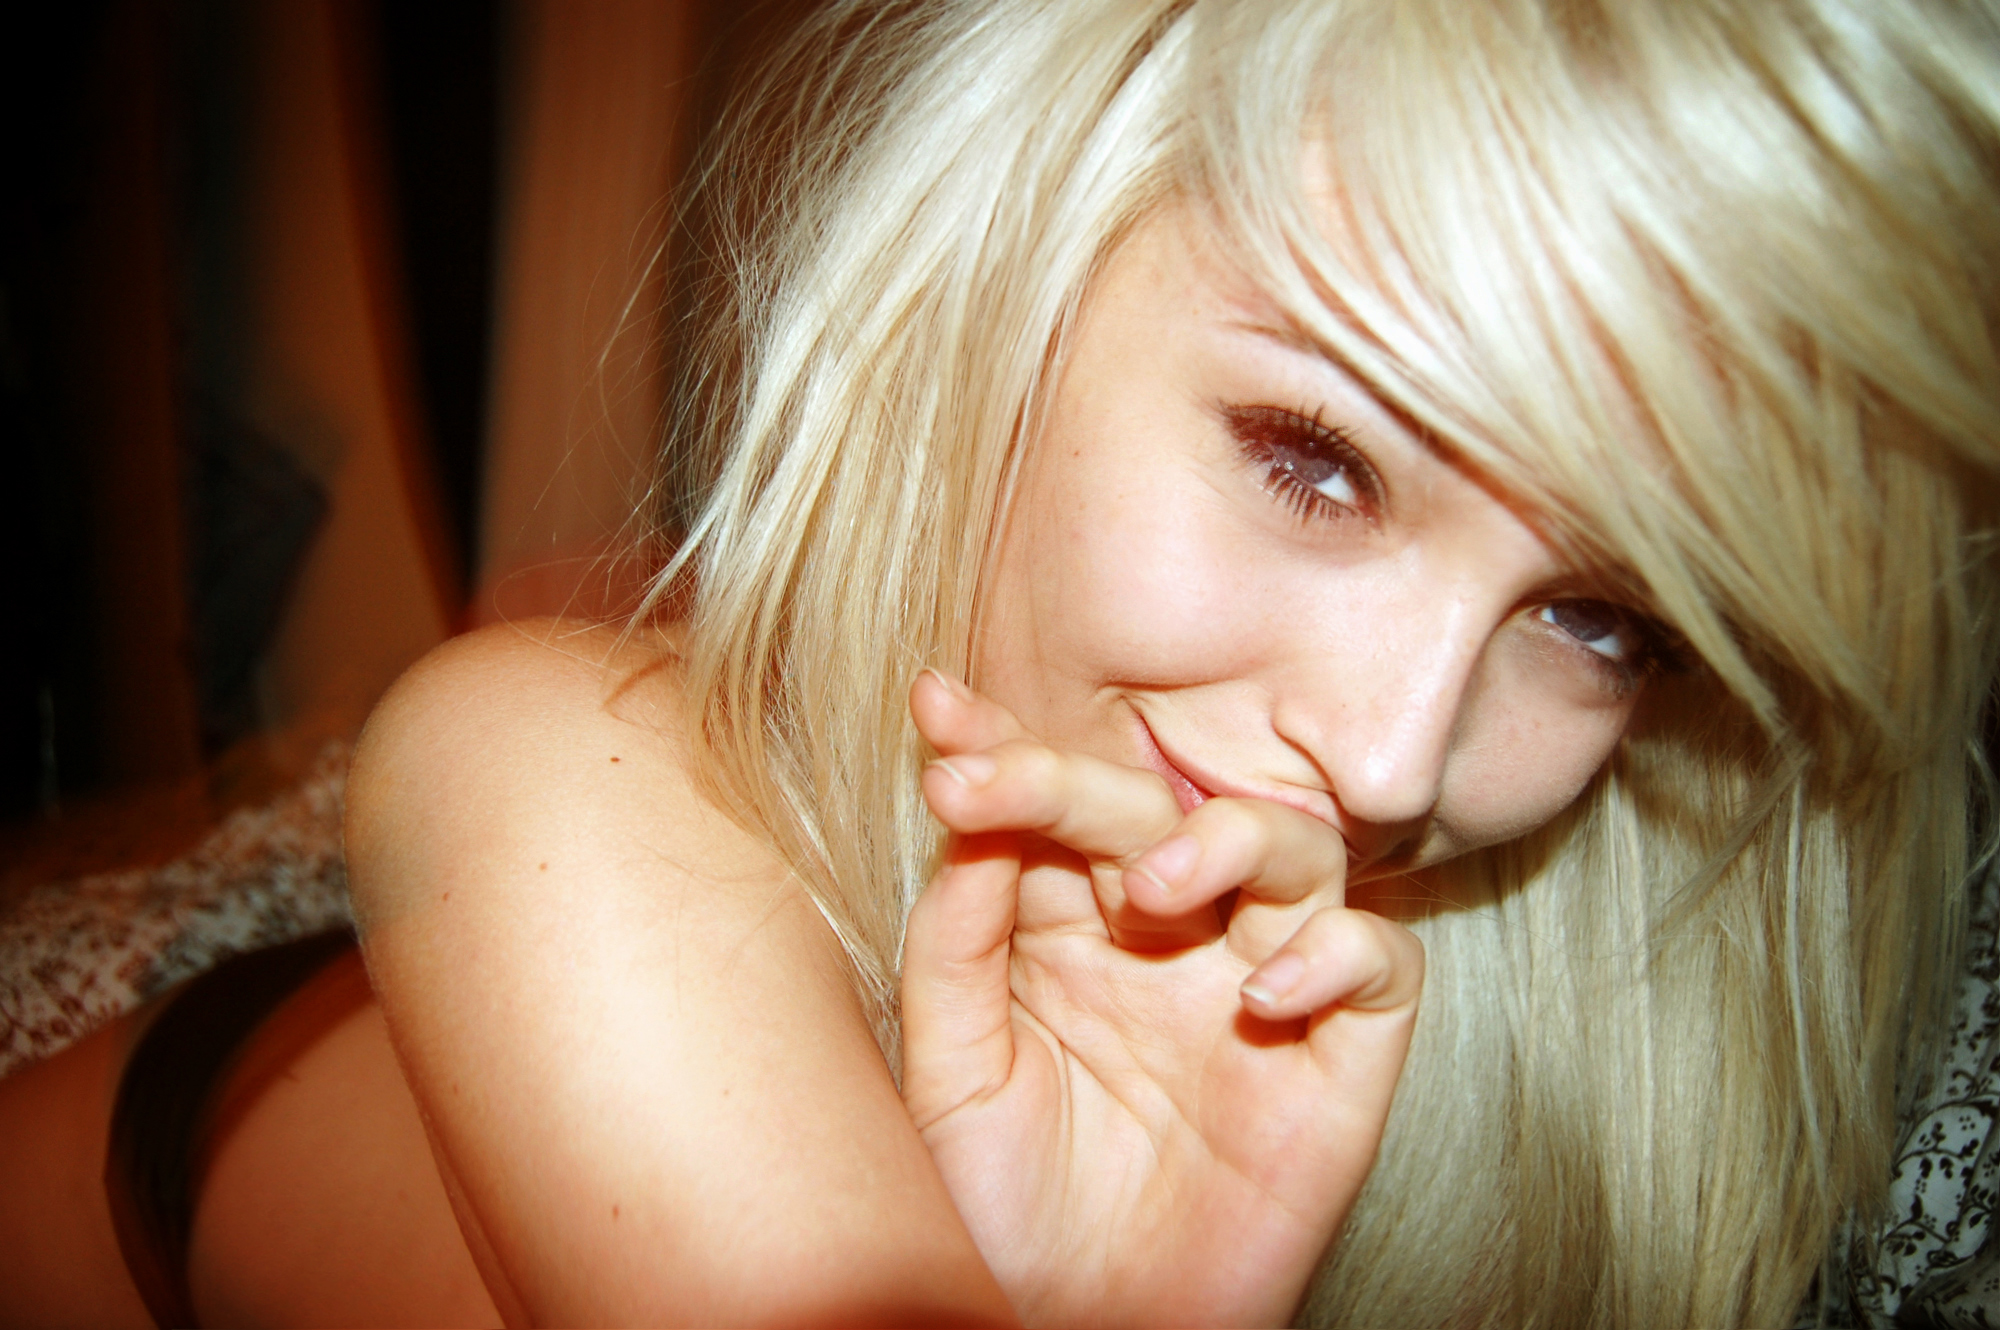 Czech beautiful blonde babe fan photo